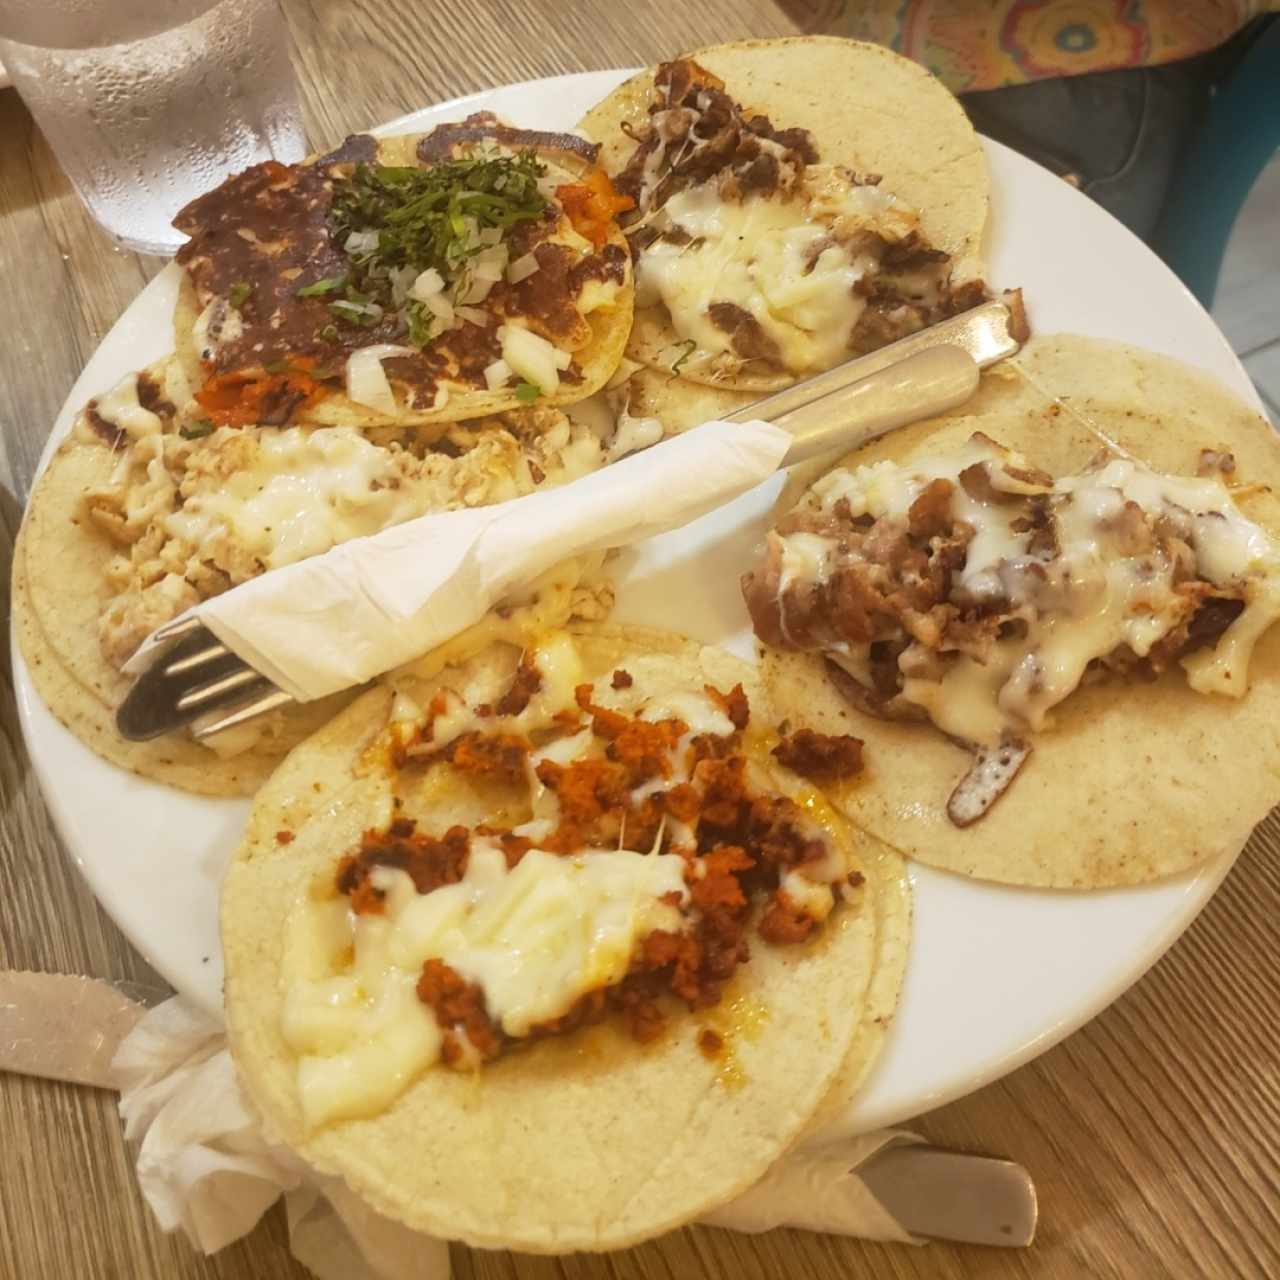 Tacos Mixtos